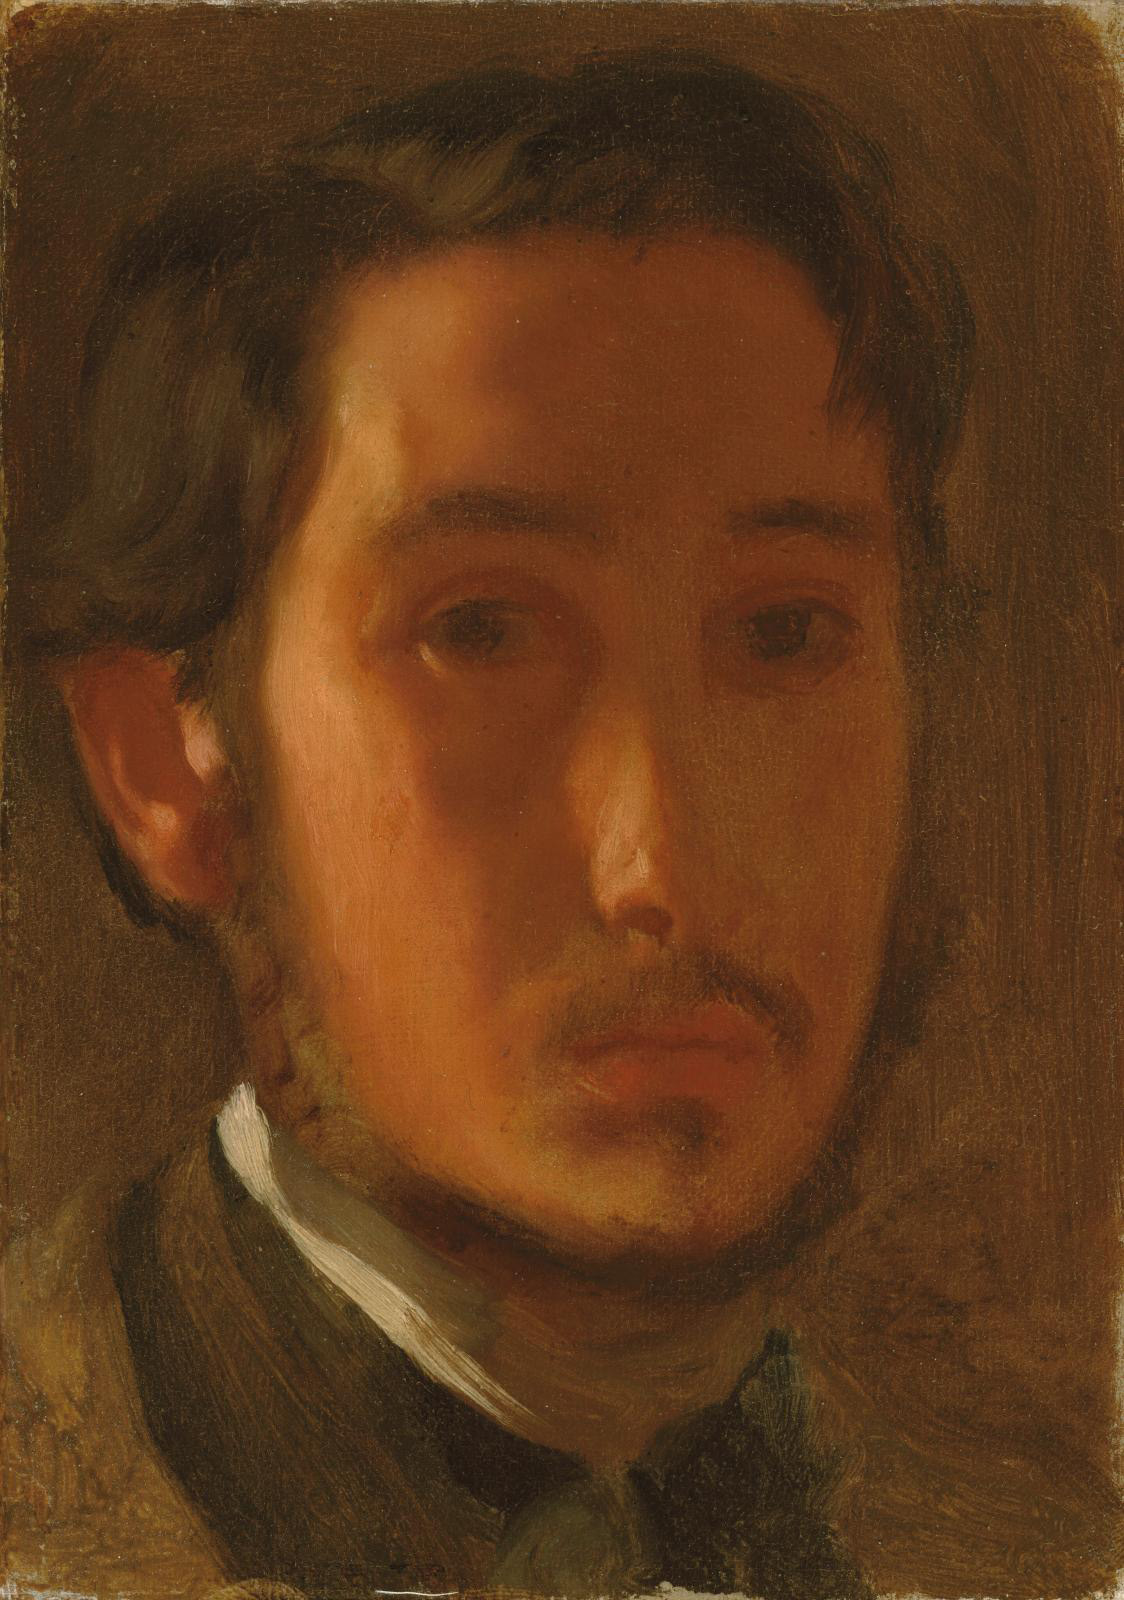 Degas’ Correspondence: An Artist More Complex Than He Seems